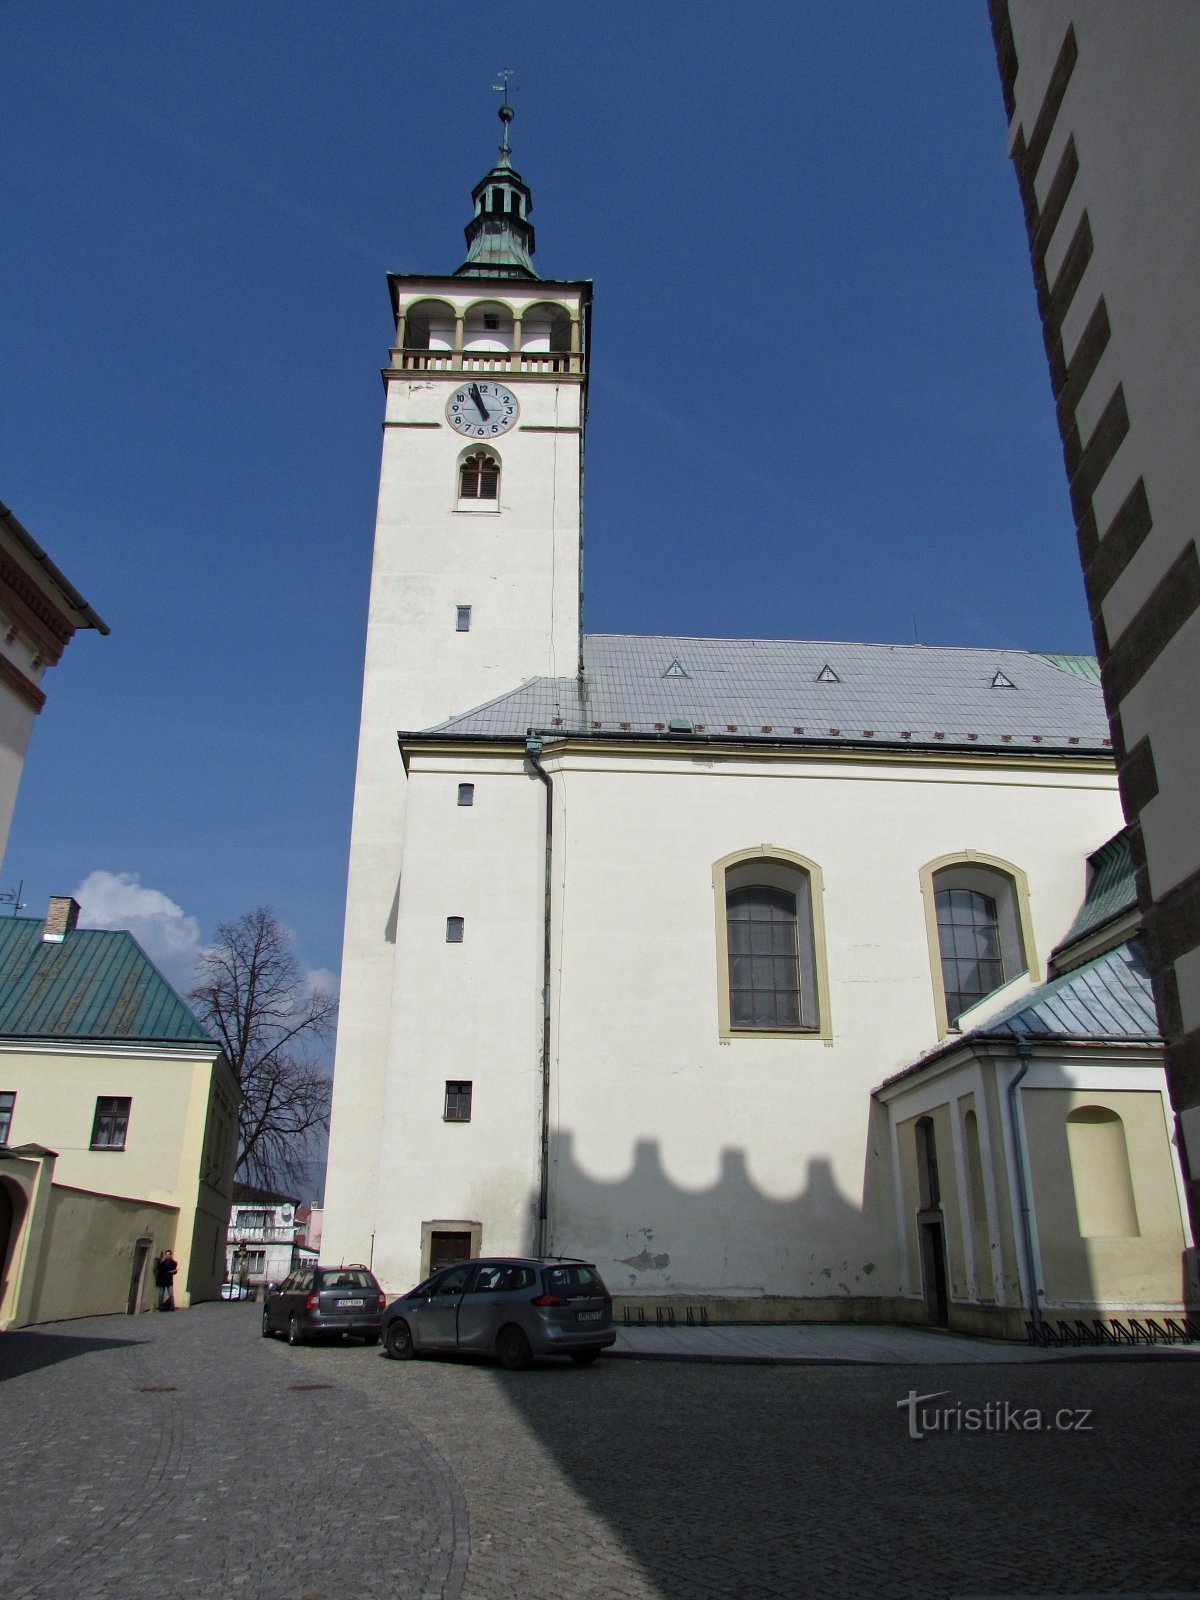 Lipník nad Bečvou - church of St. James and bell tower